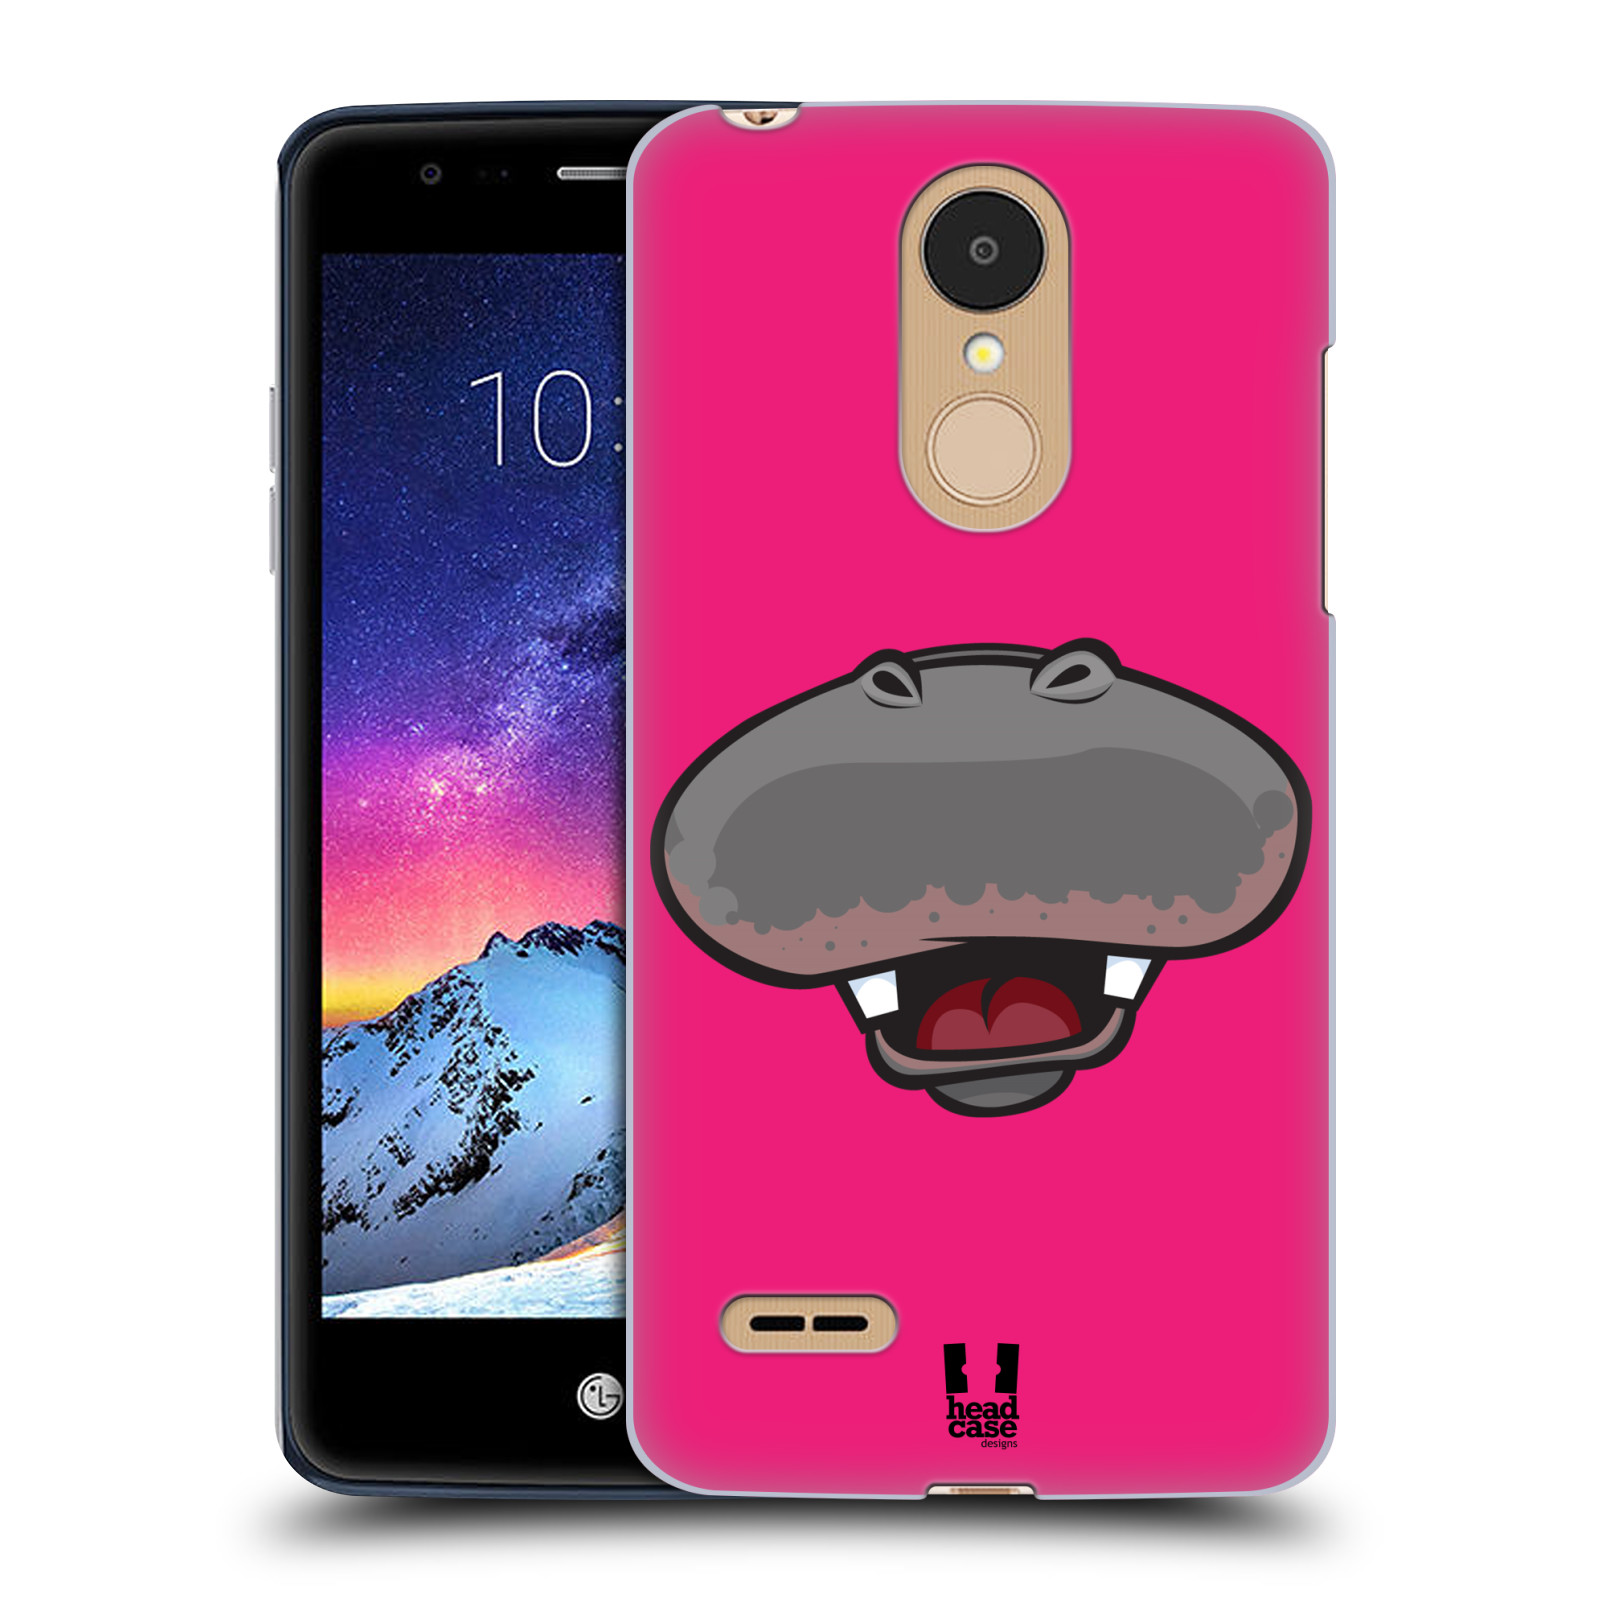 HEAD CASE plastový obal na mobil LG K9 / K8 2018 vzor Zvířecí úsměv hroch růžová